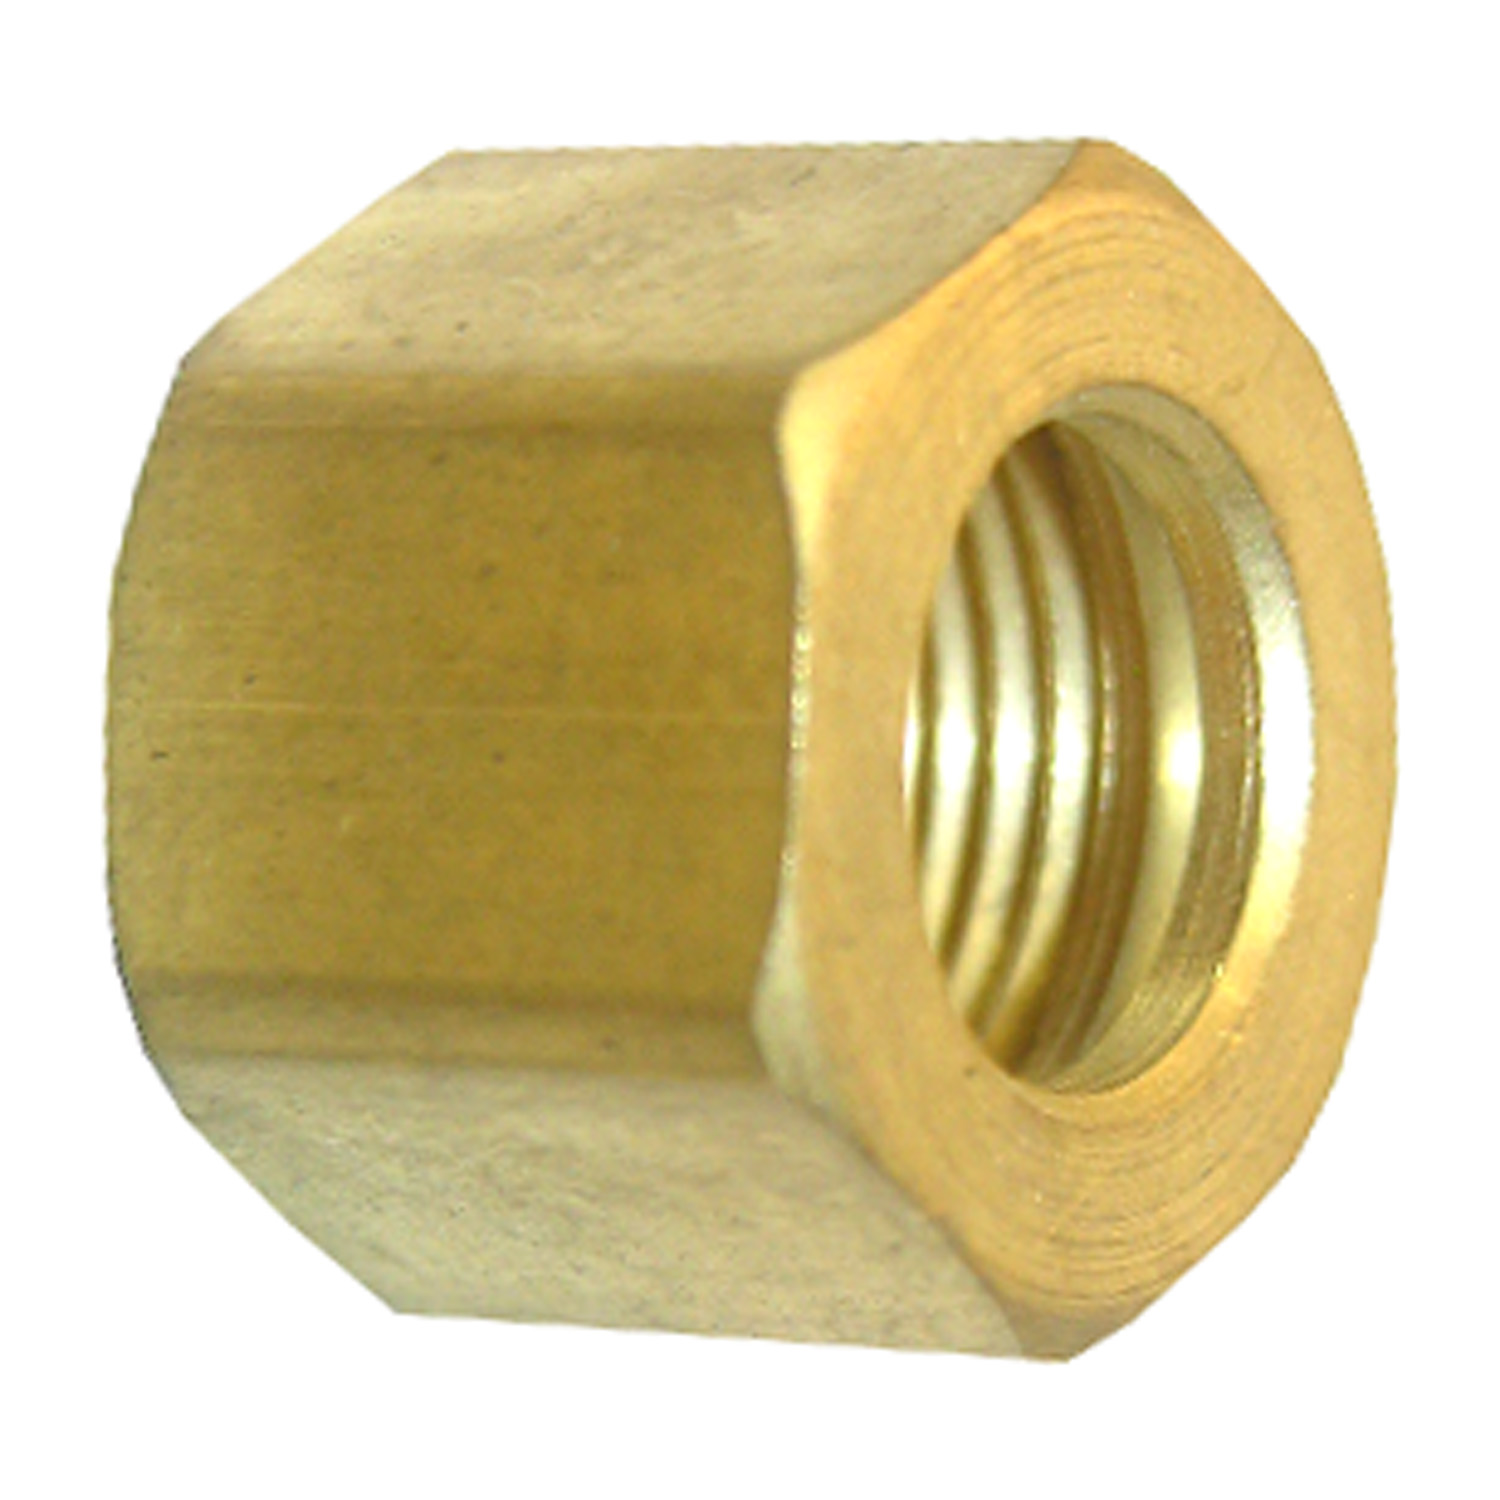 17-6101 Nut, 1/8 in, Compression, Brass